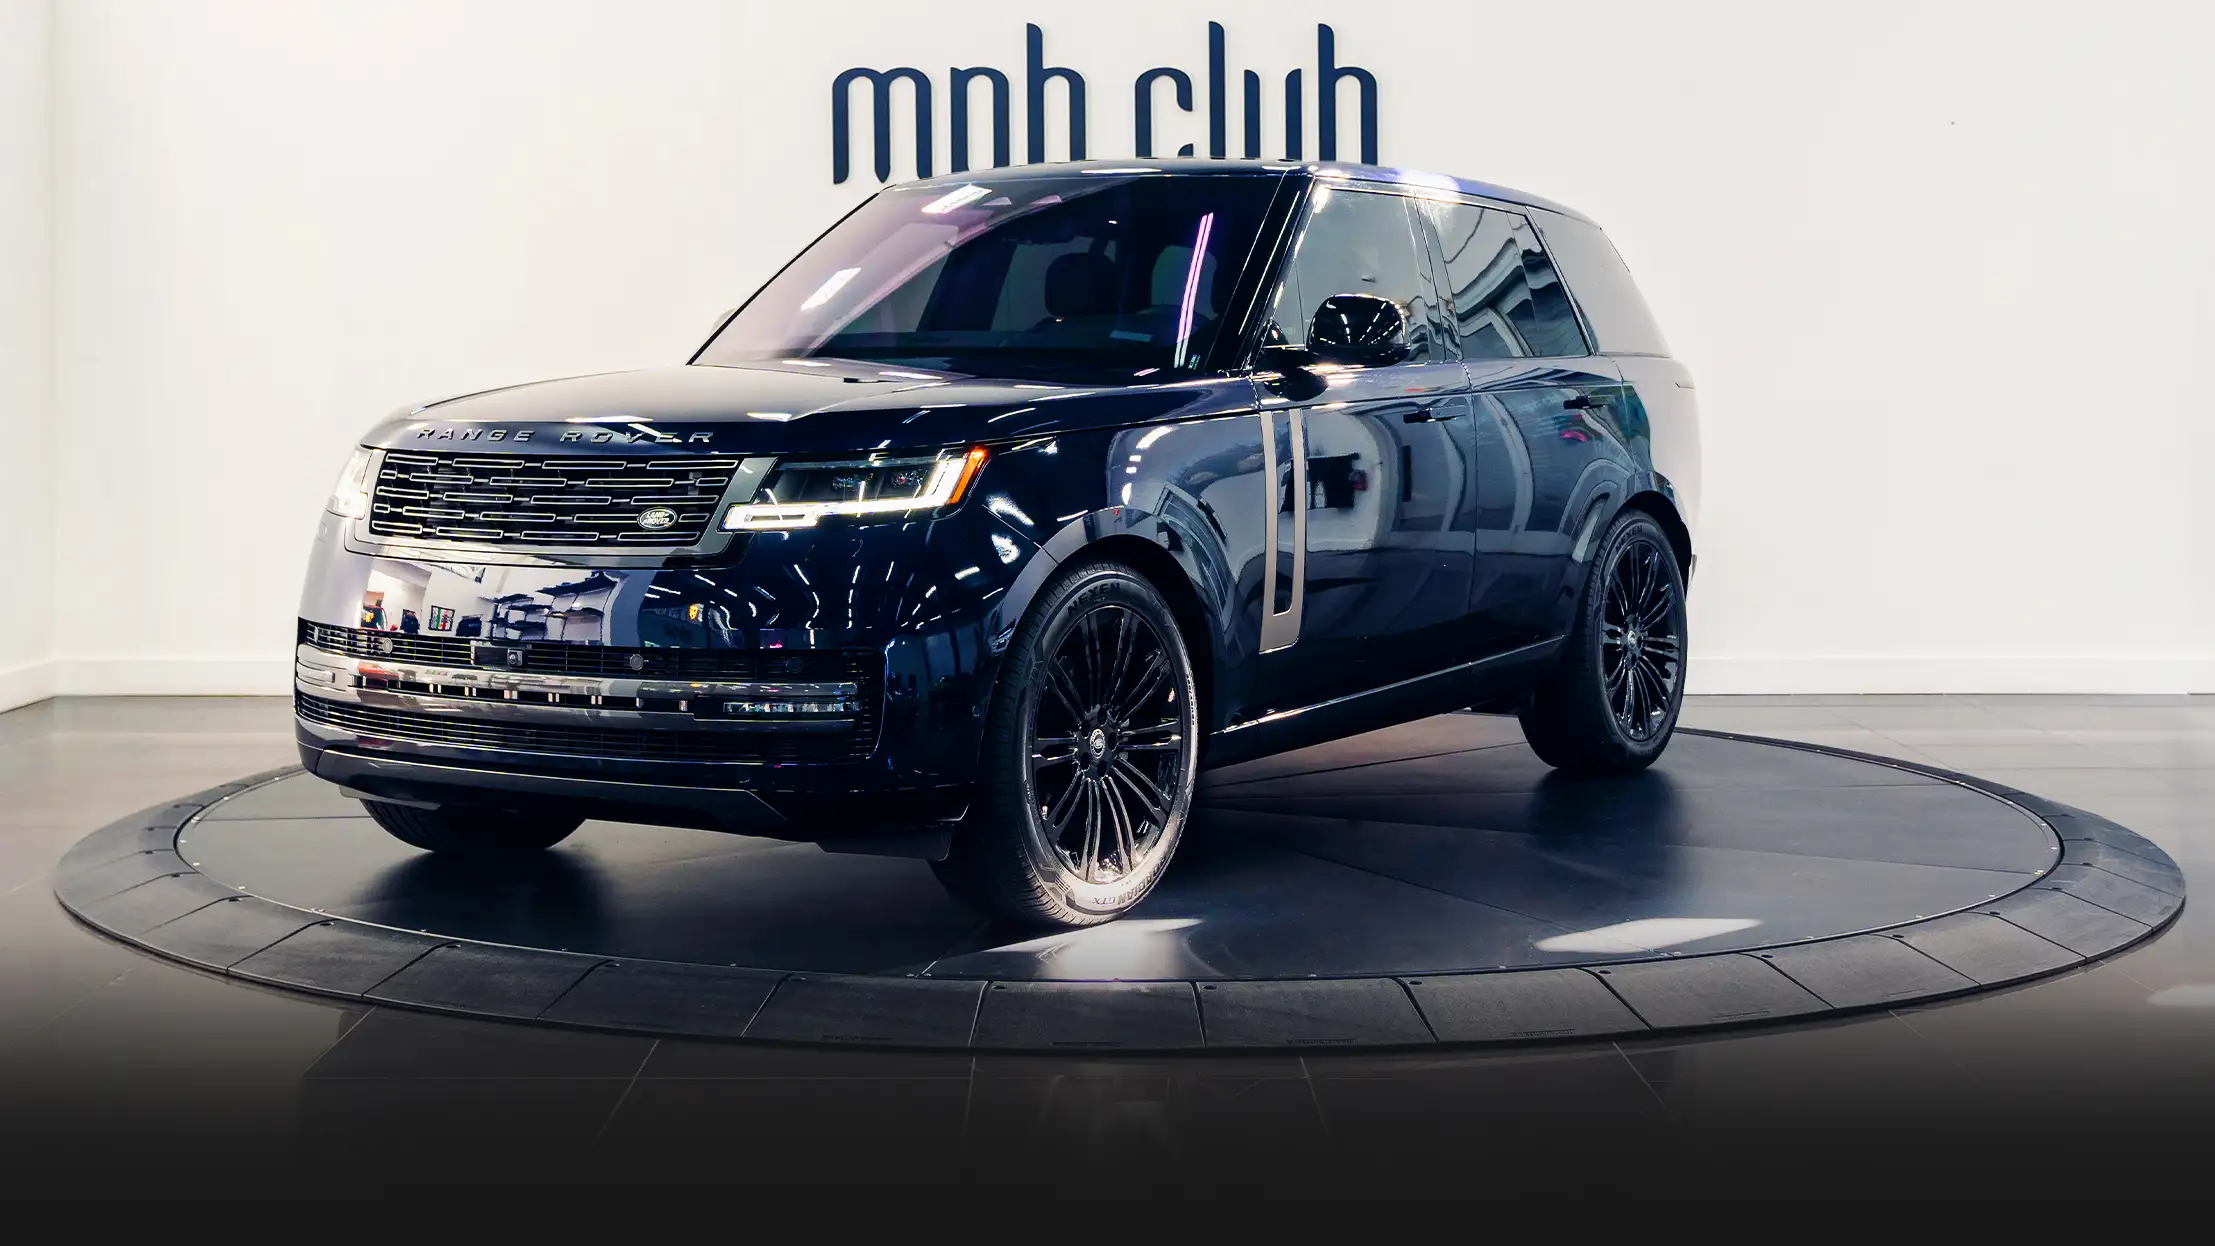 Range Rover SUV Rental - Exotic Car Rental - mph club